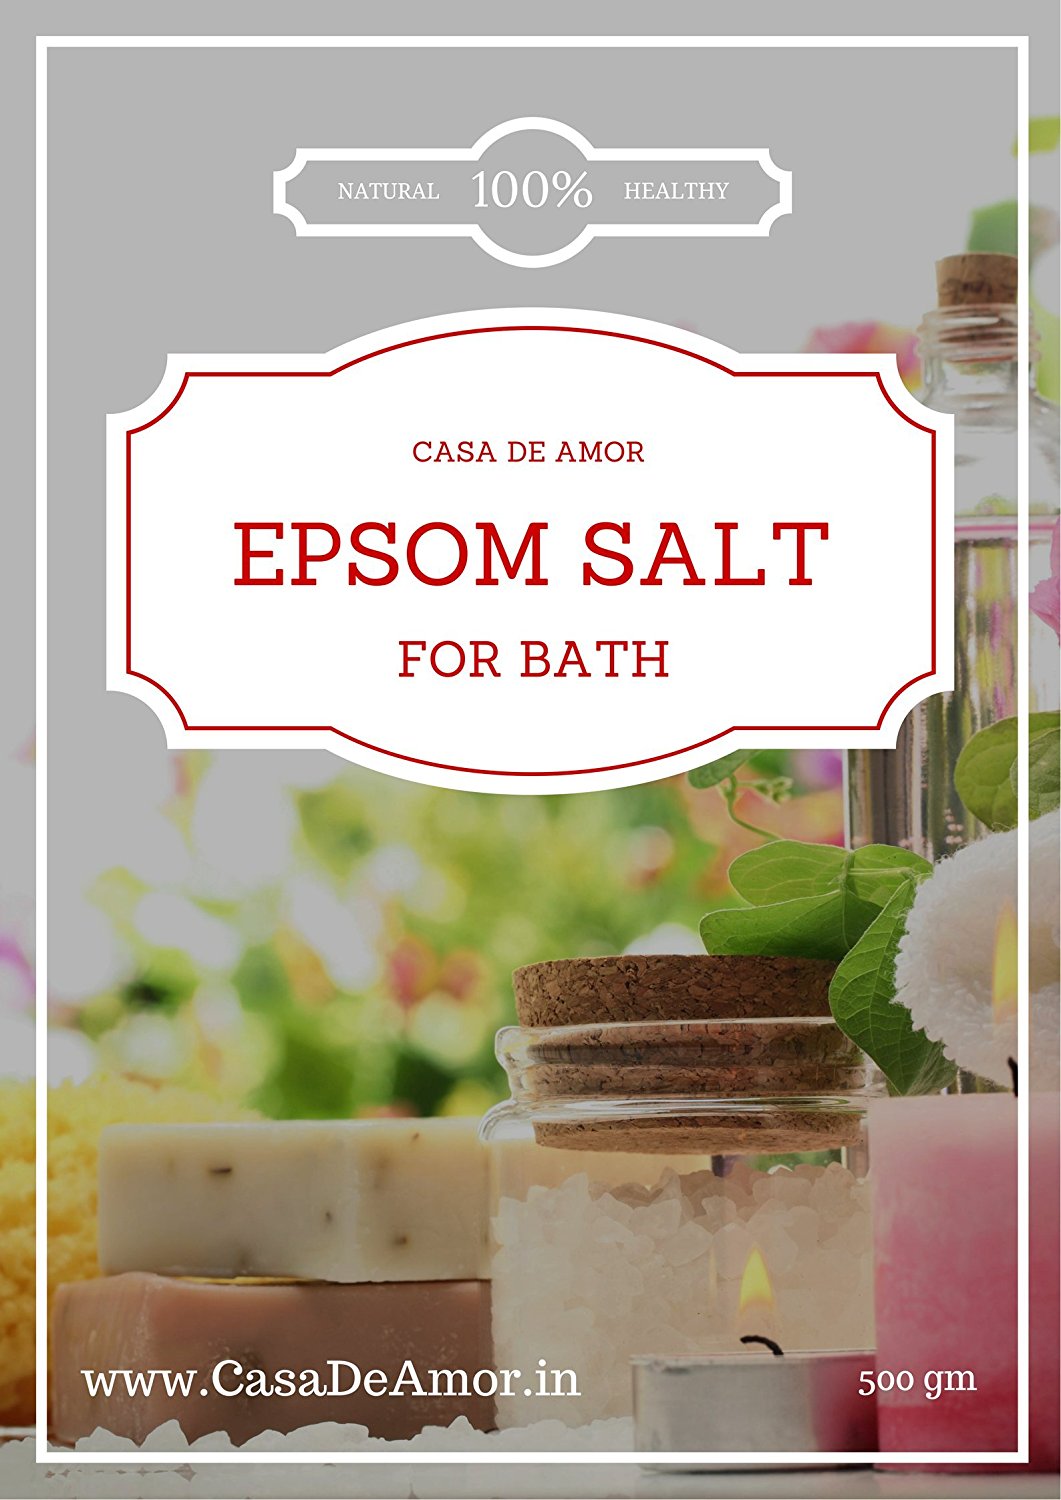 Epsom Salt for Bath and Spa, Pure and Healthy, 500 gm - Casa De Amor Organic Gardening India